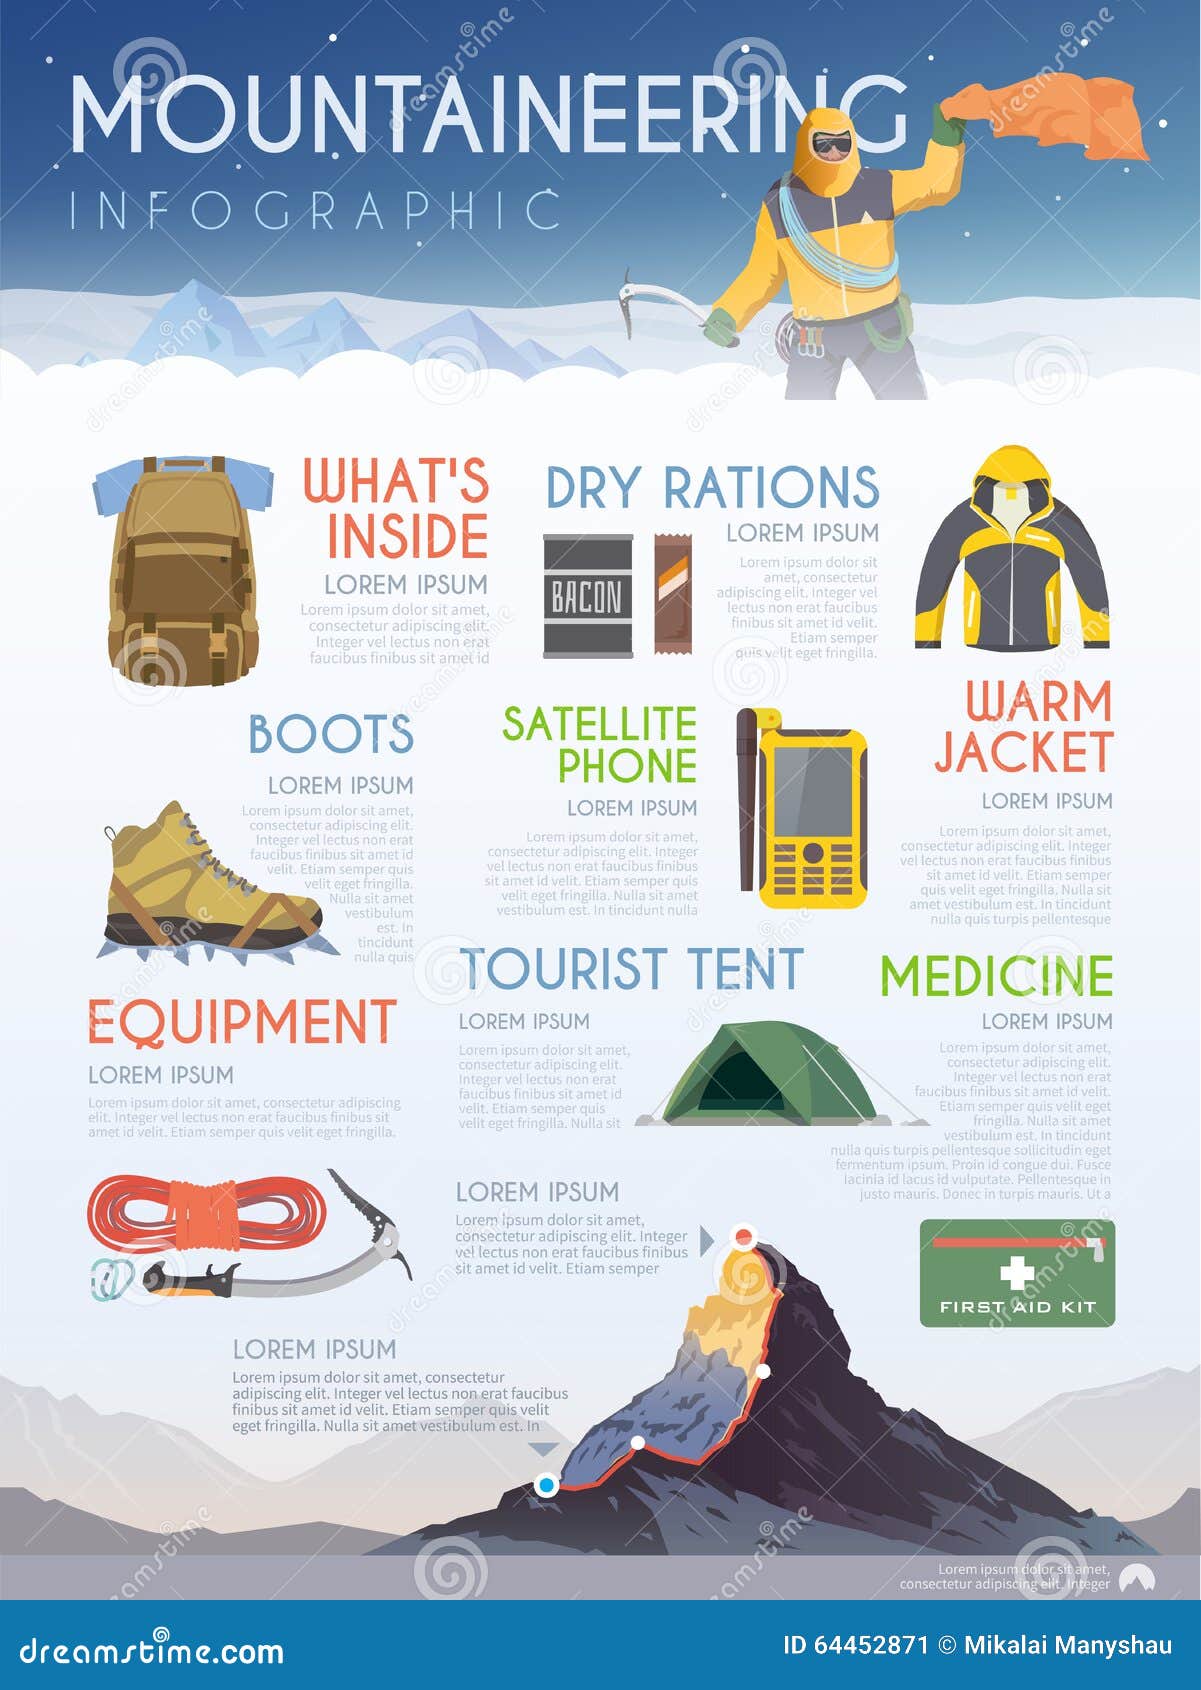  mountaineering brochure infographic